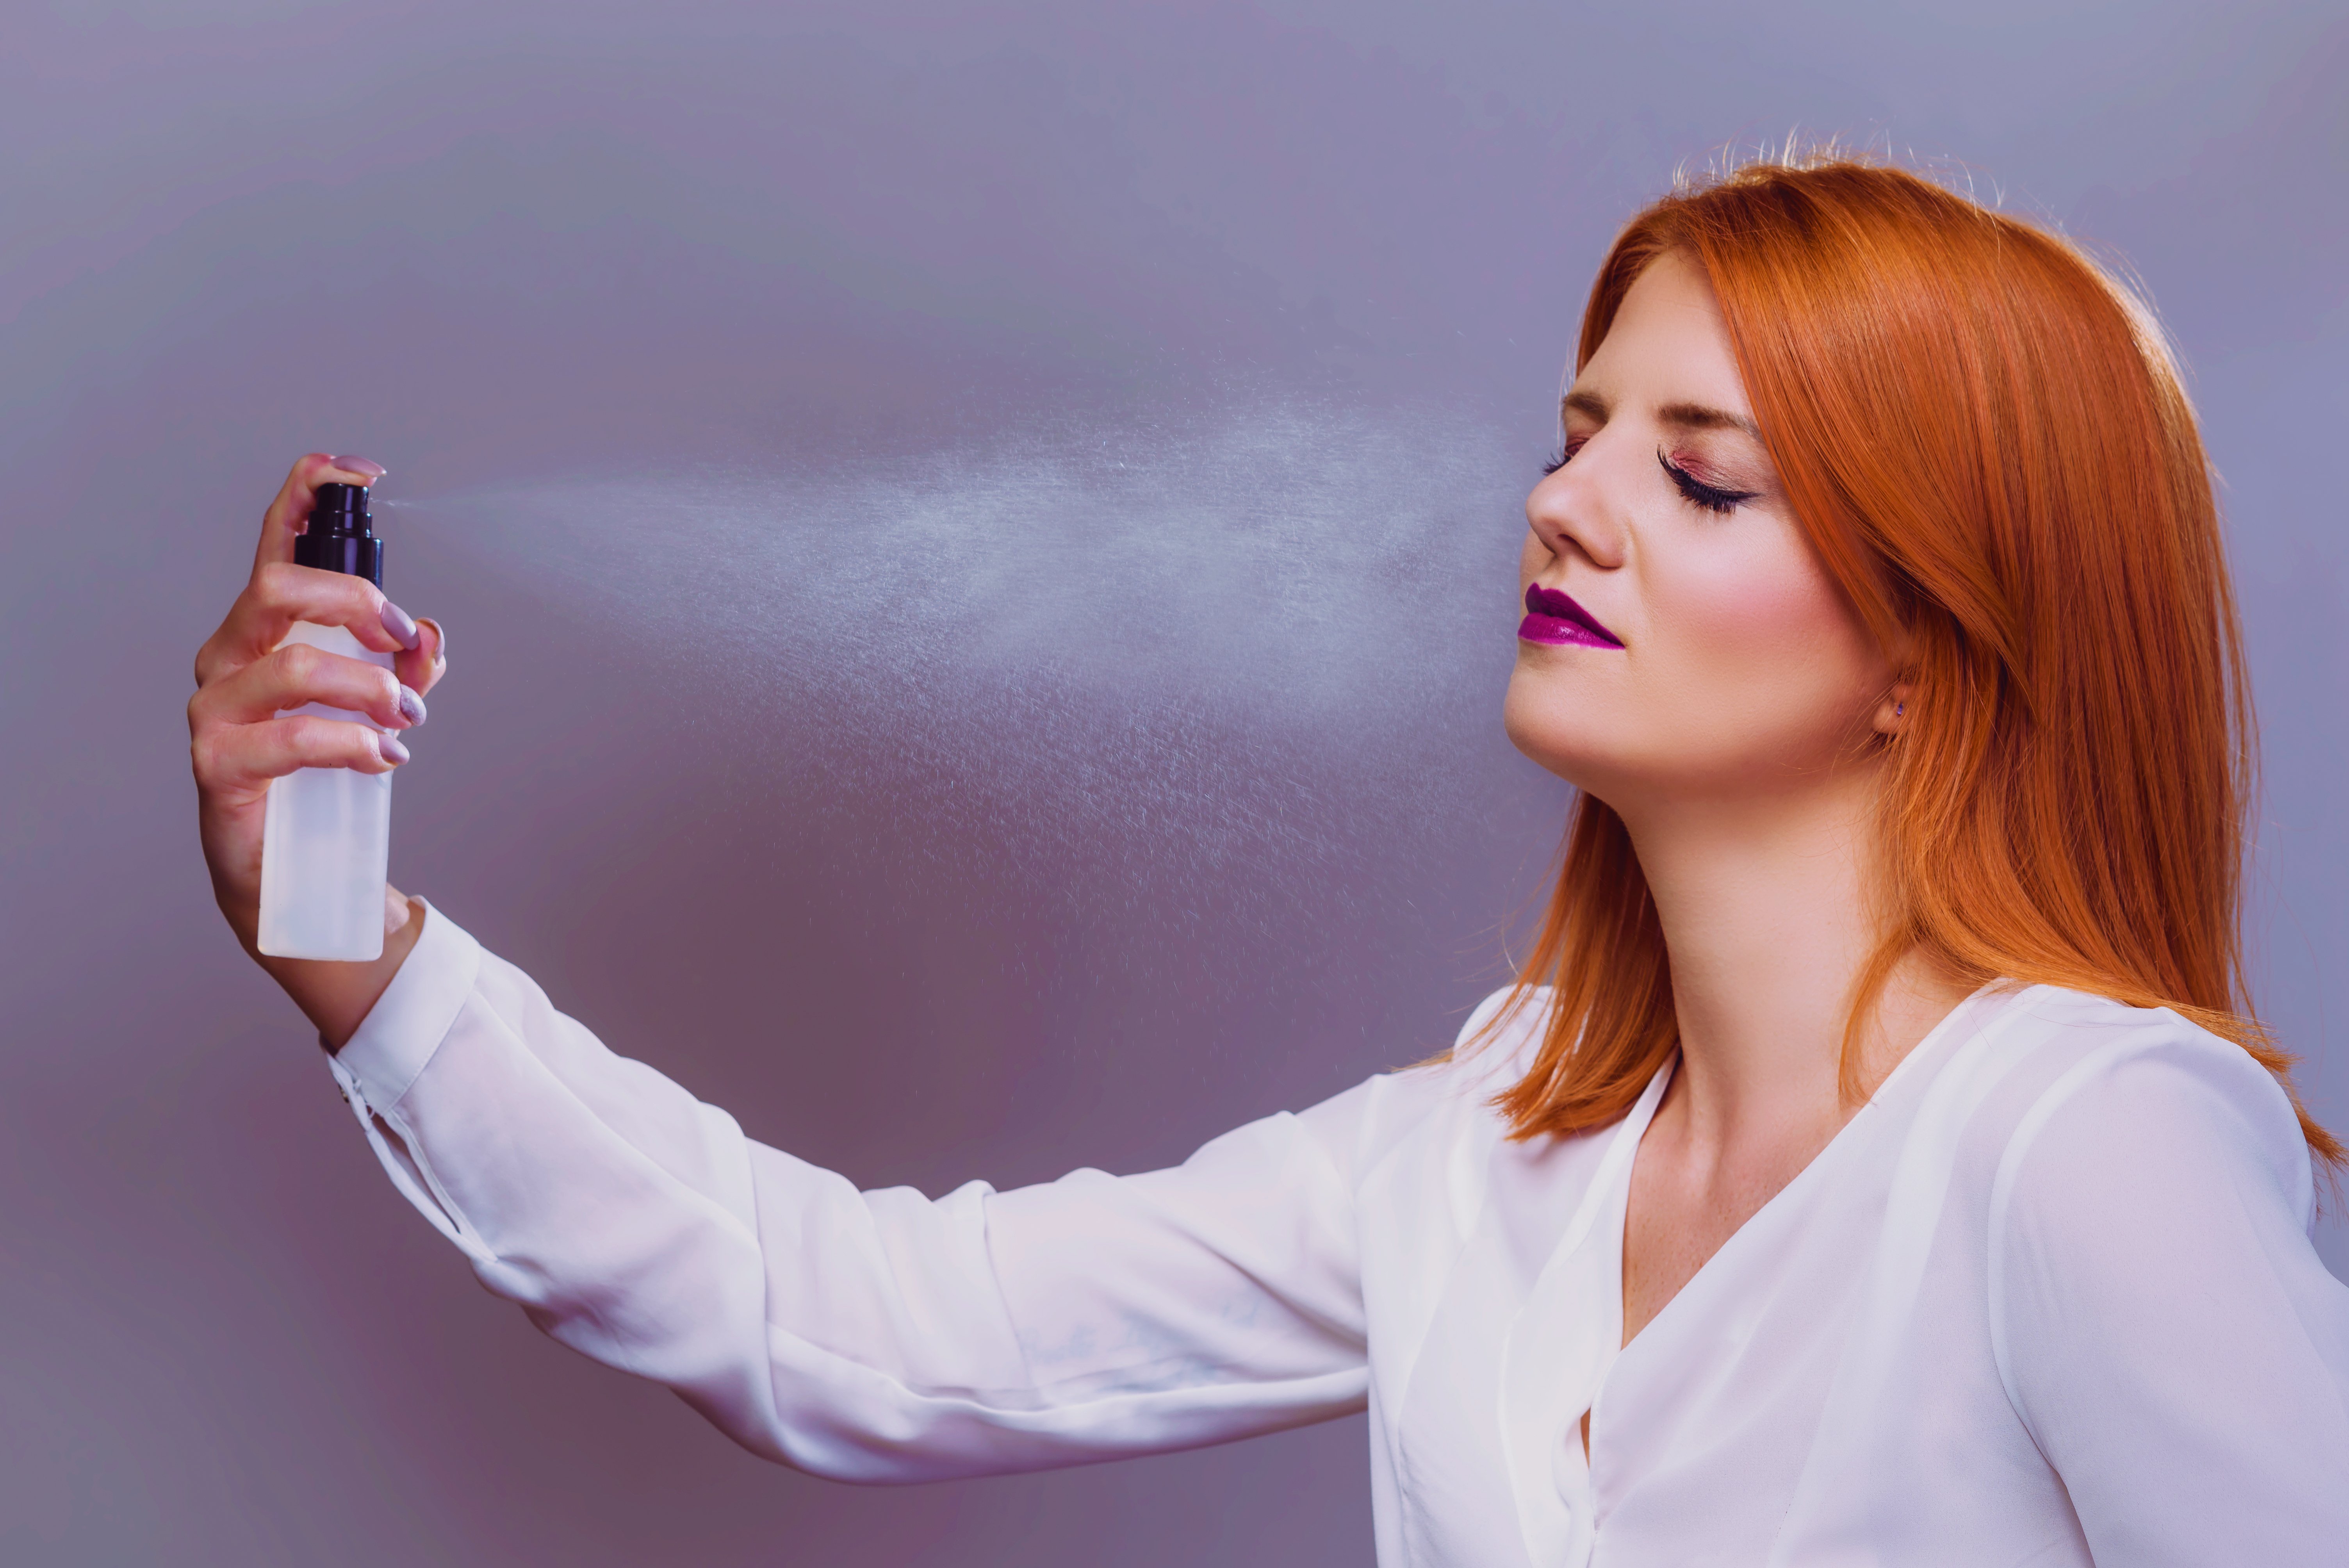 Woman using a setting spray after applying makeup | Source: Shutterstoock